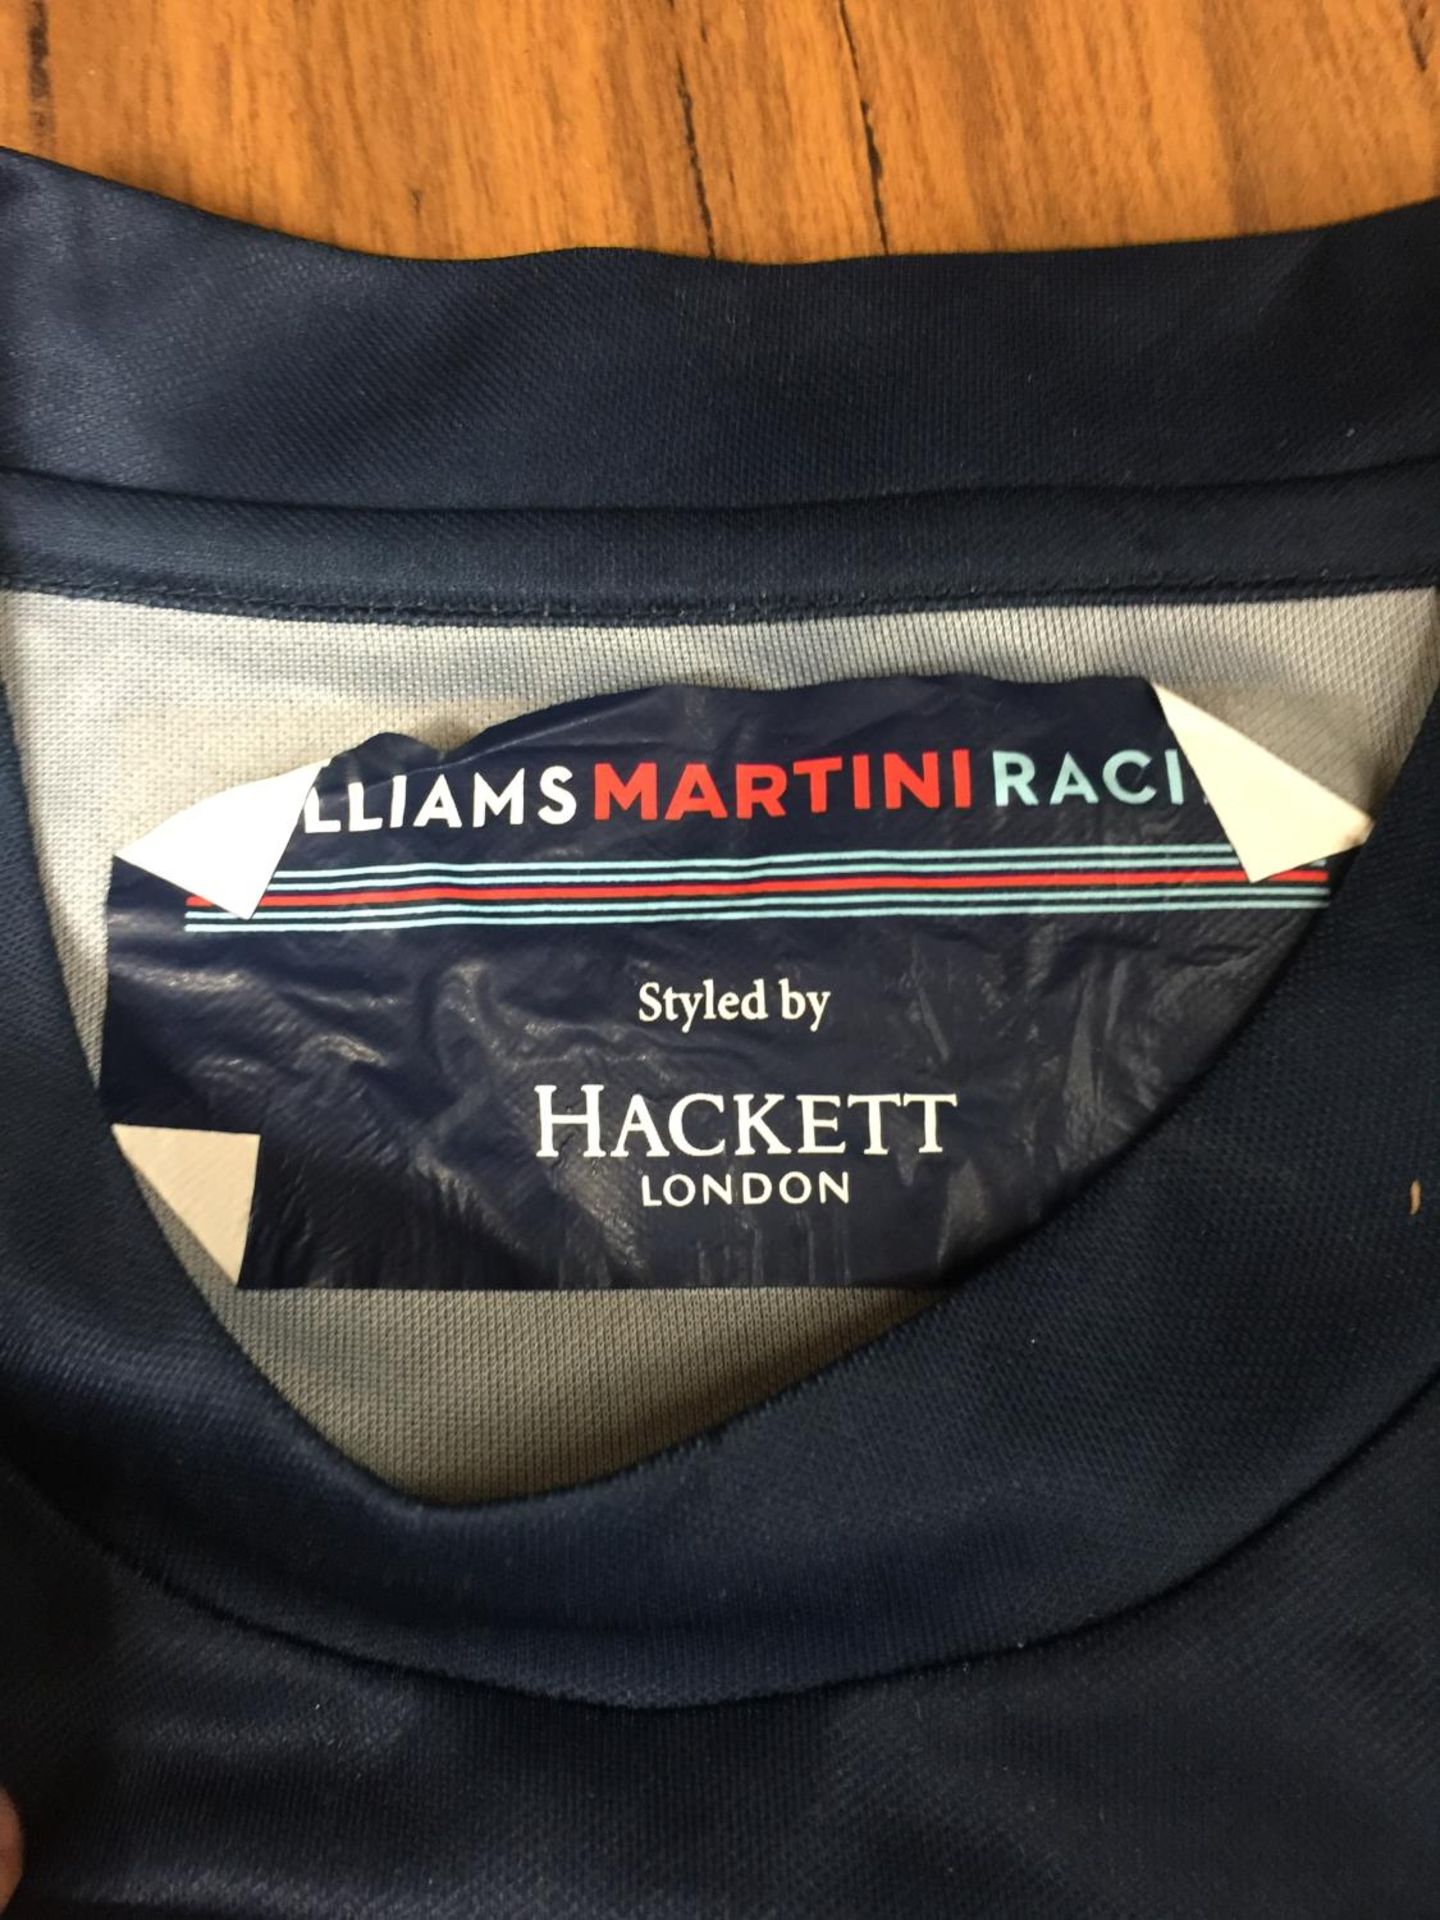 A WILLIAMS MARTINI RACING SHIRT BY HACKETT, LONDON SIZE 14 PLUS A CERAMIC LABATT'S CANON 'NIGEL - Bild 3 aus 4